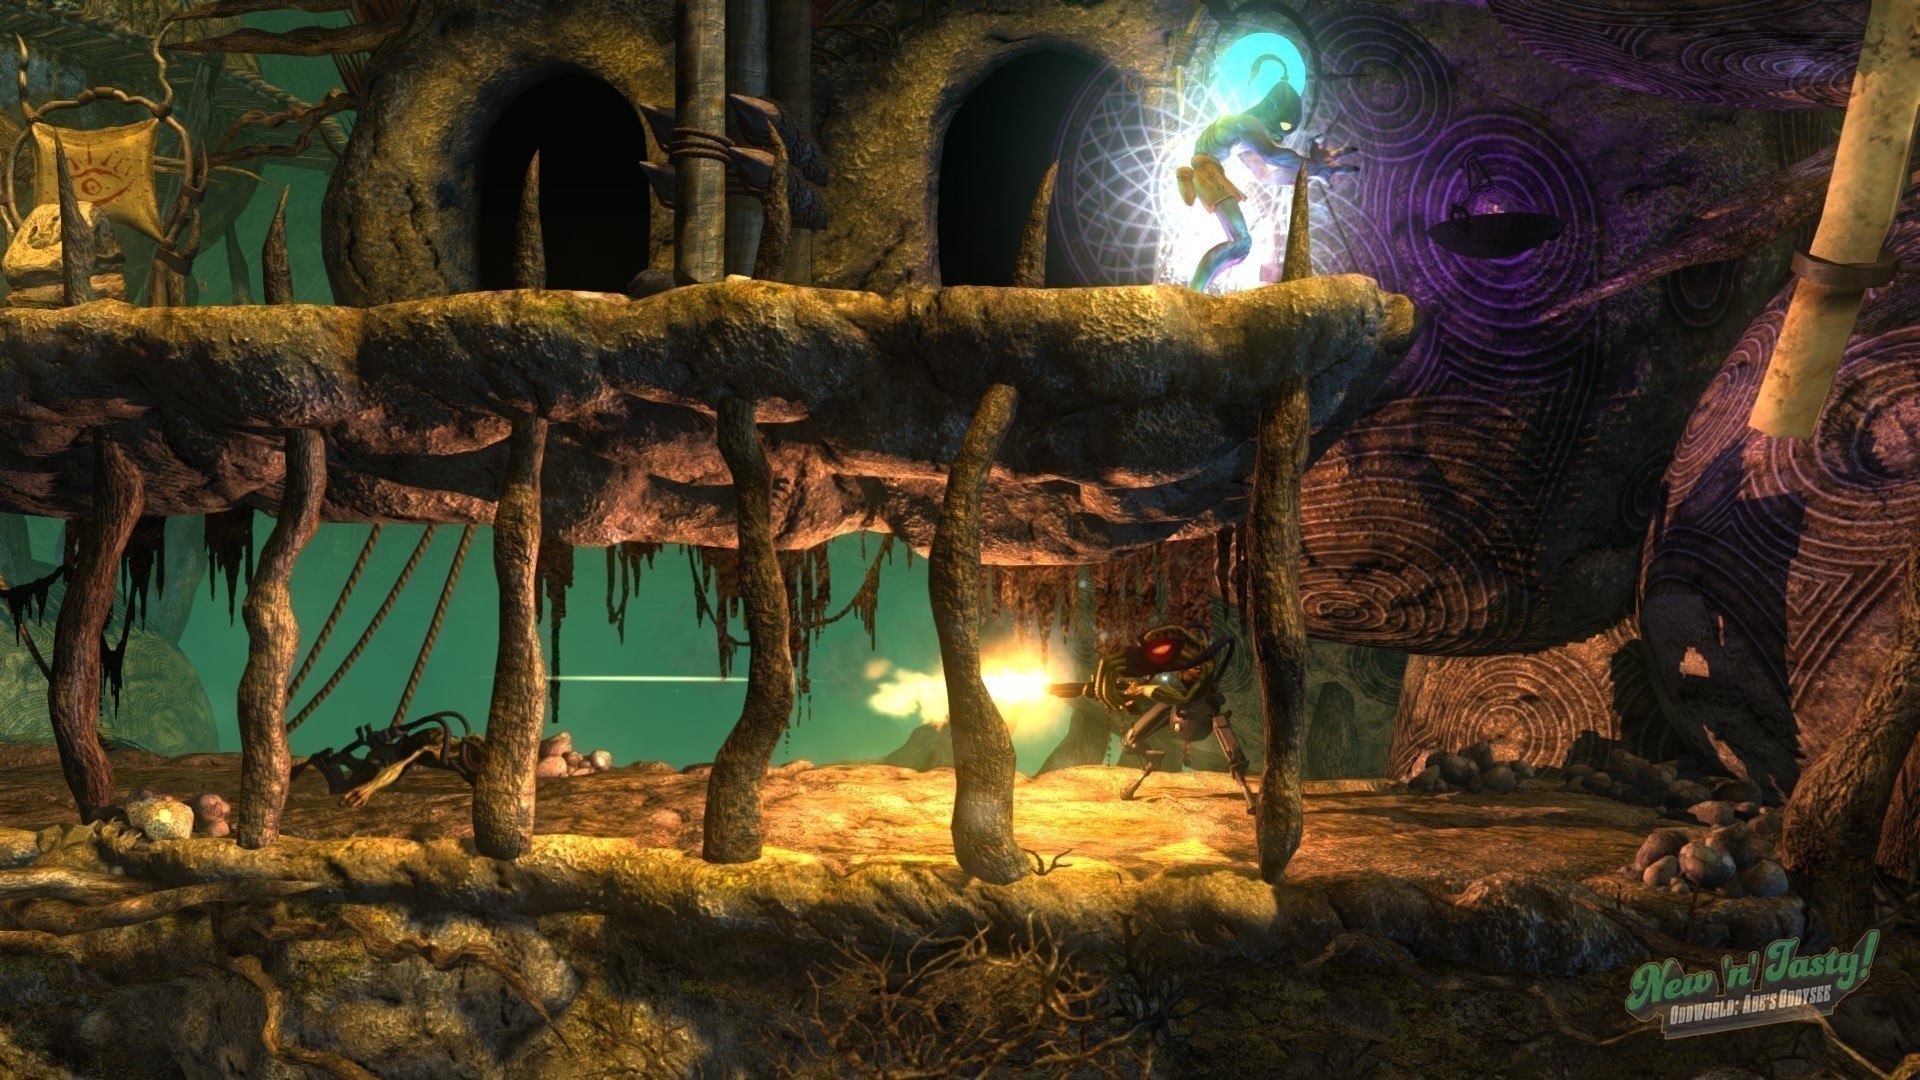 Epic games - Oddworld: New 'n' Tasty